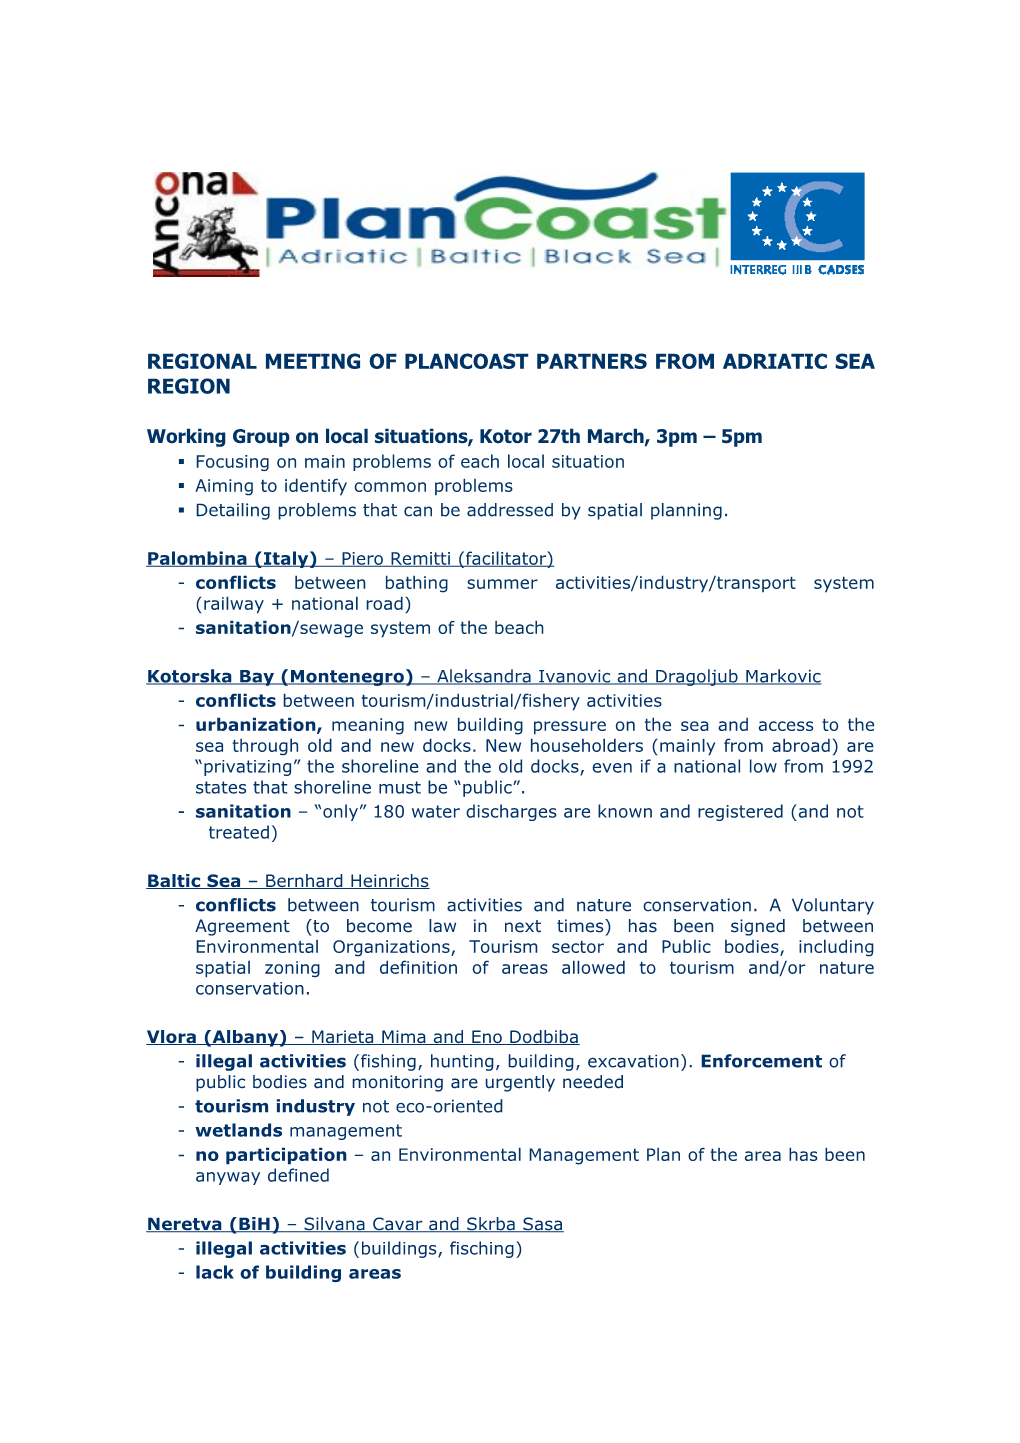 Regional Meeting of Plancoast Partners from Adriatic Sea Region